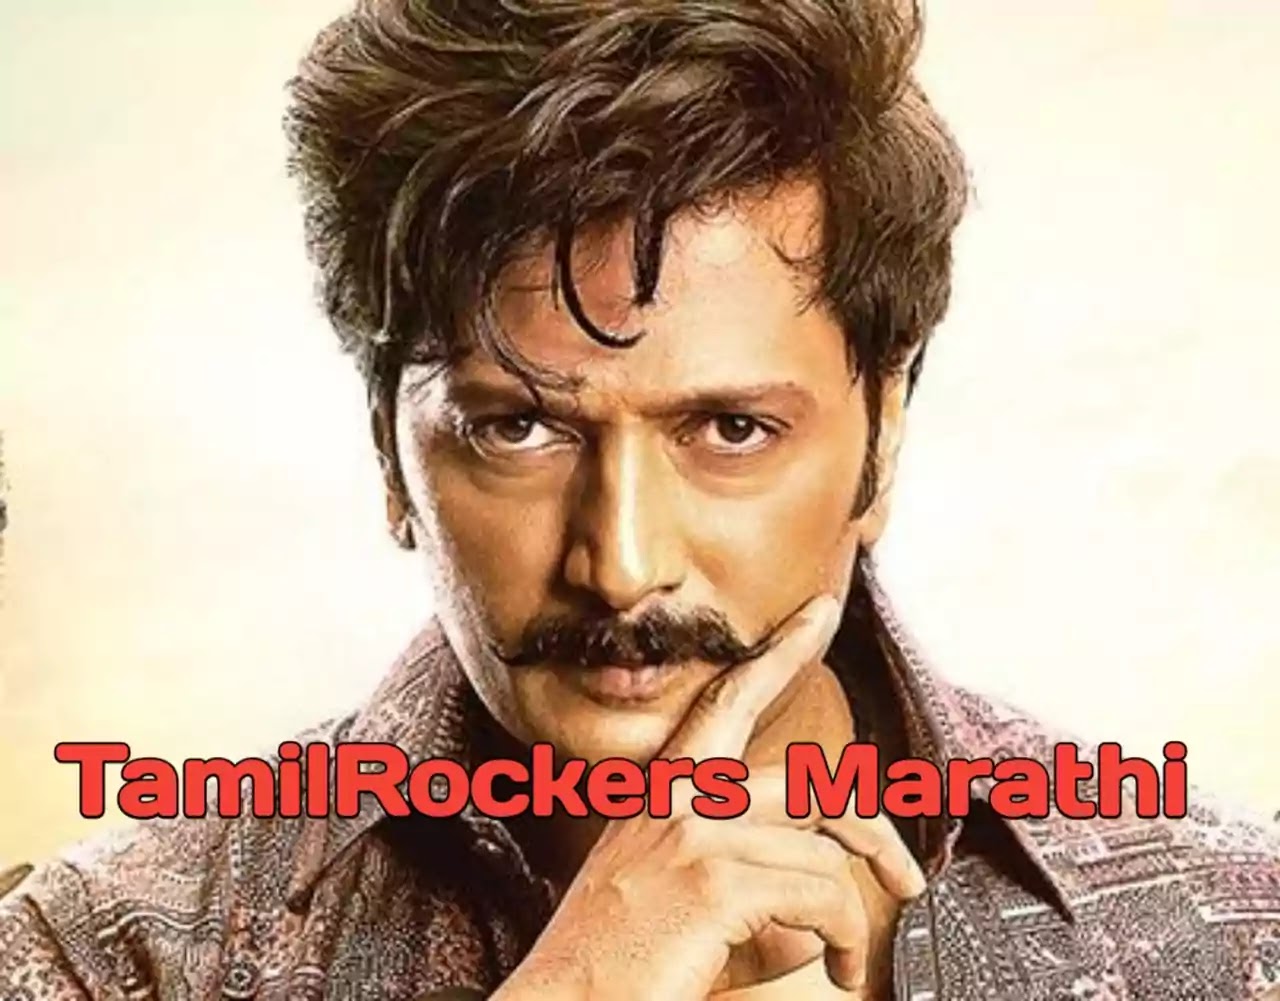 TamilRockers Marathi movie download